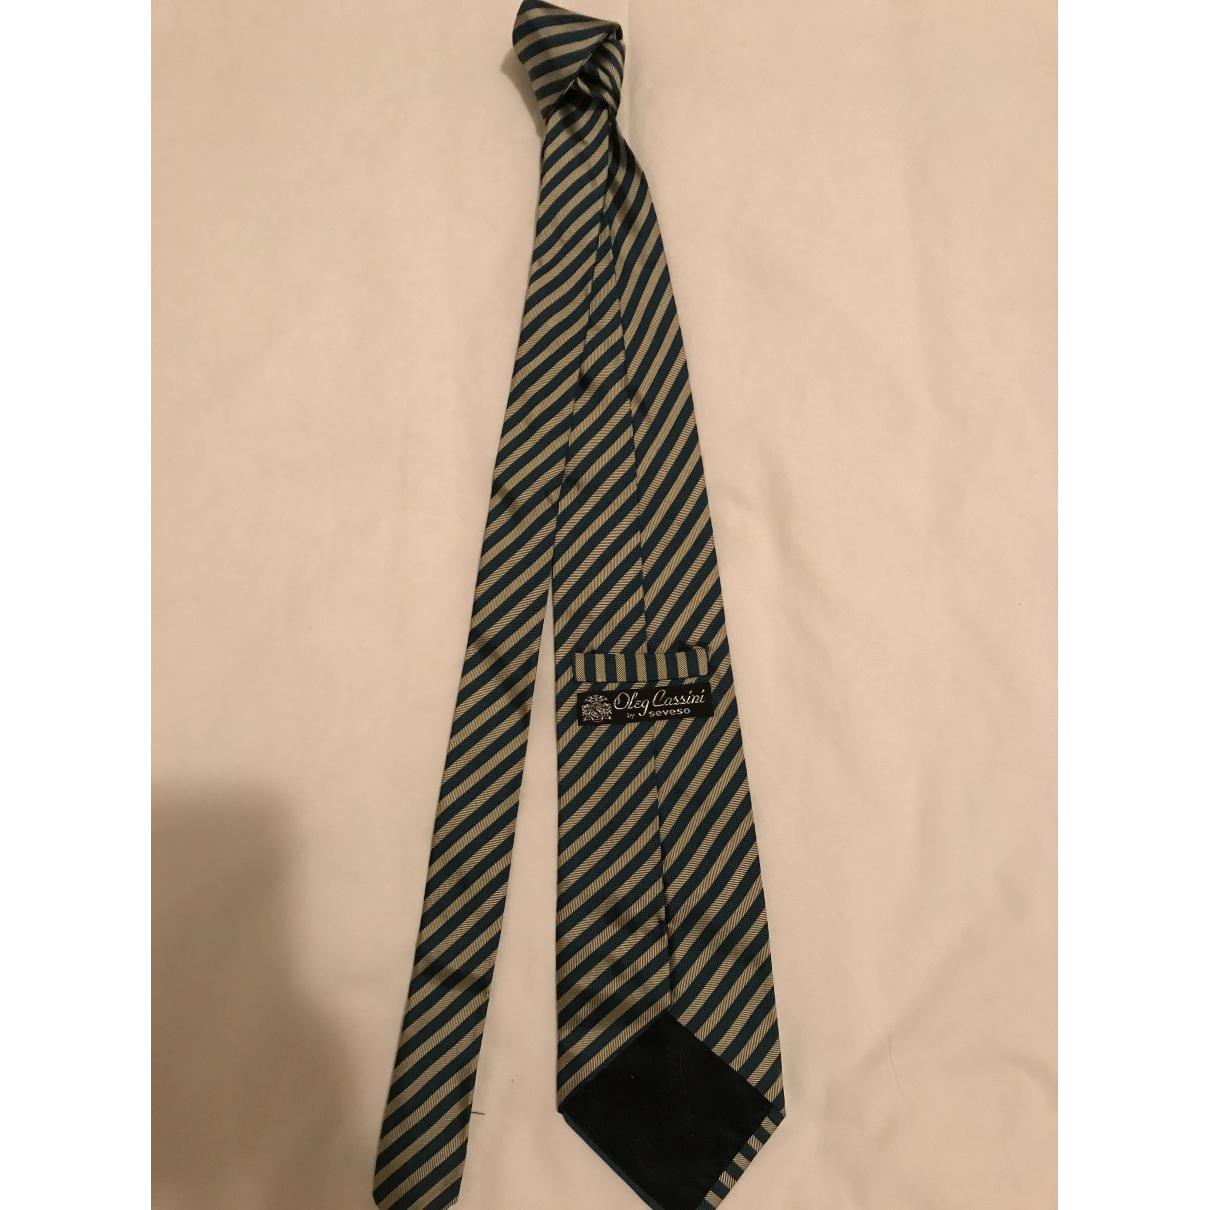 Buy Oleg Cassini Silk tie online